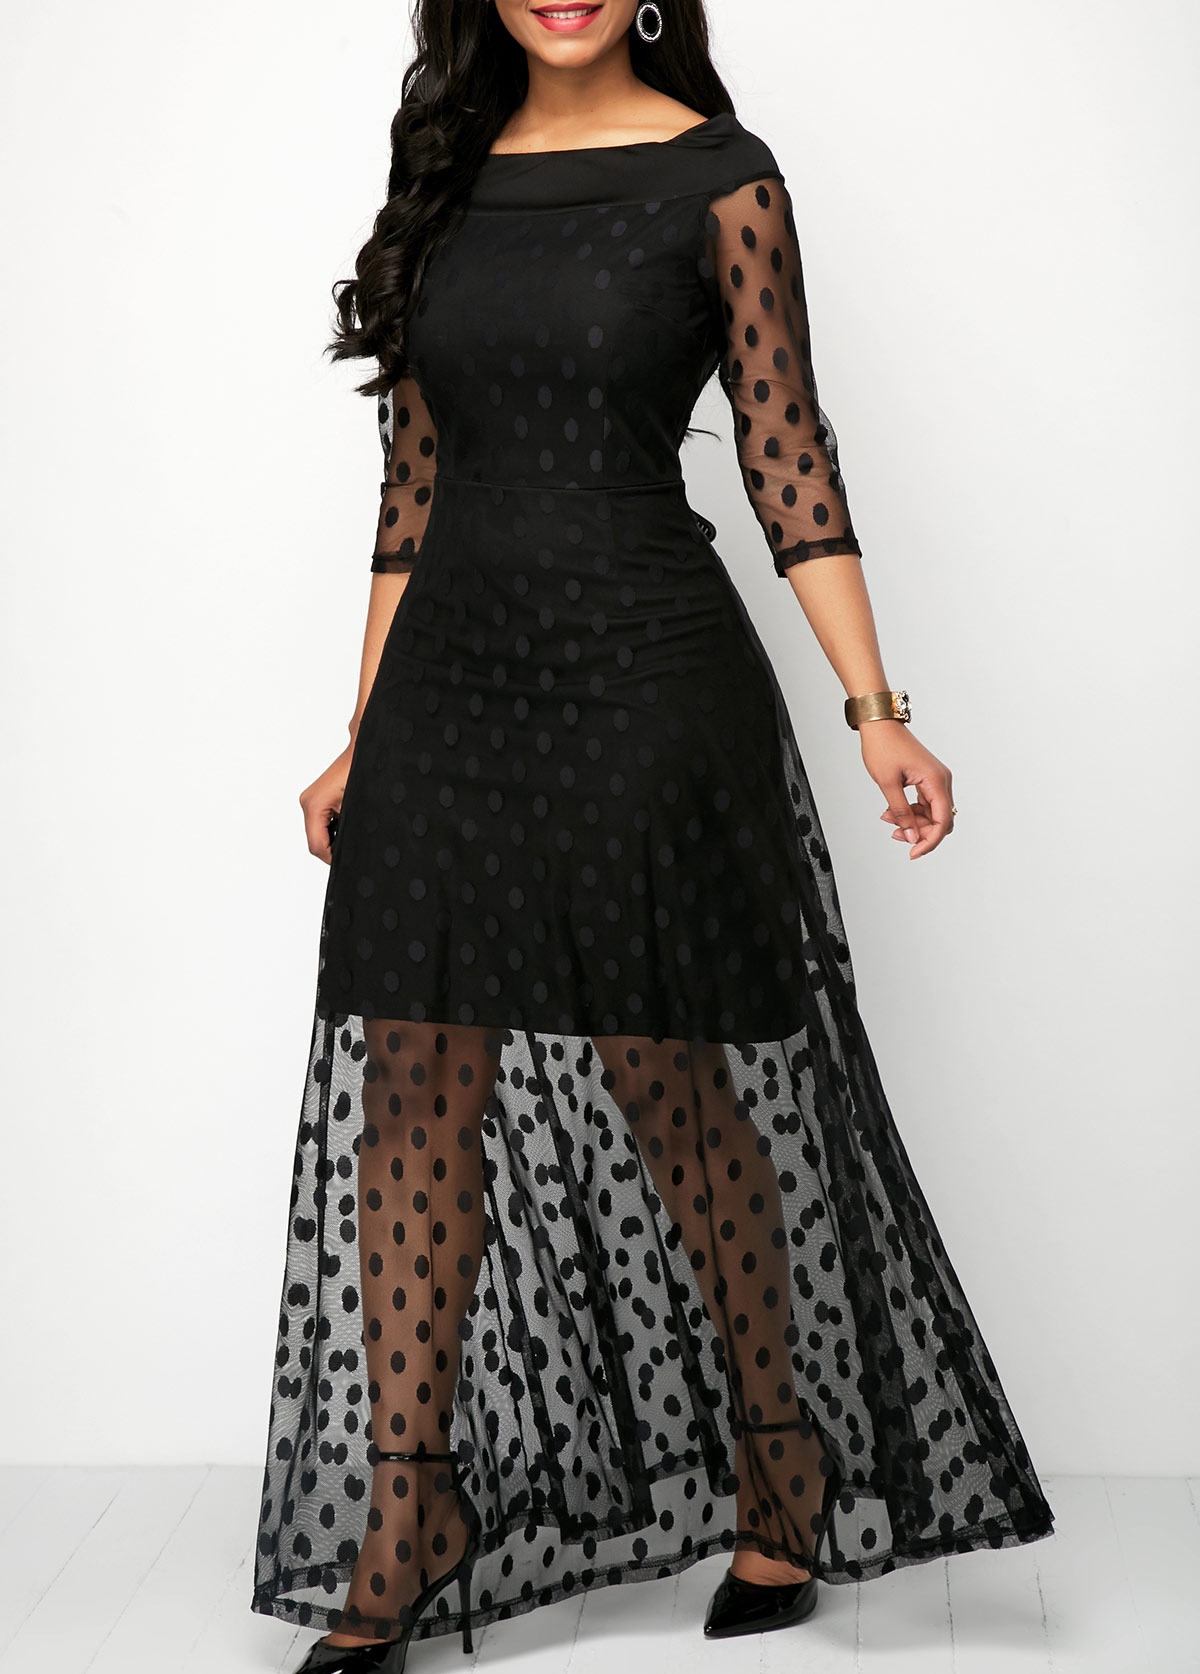 Polka Dot Three Quarter Sleeve Black Mesh Dress - Fashion Design Store